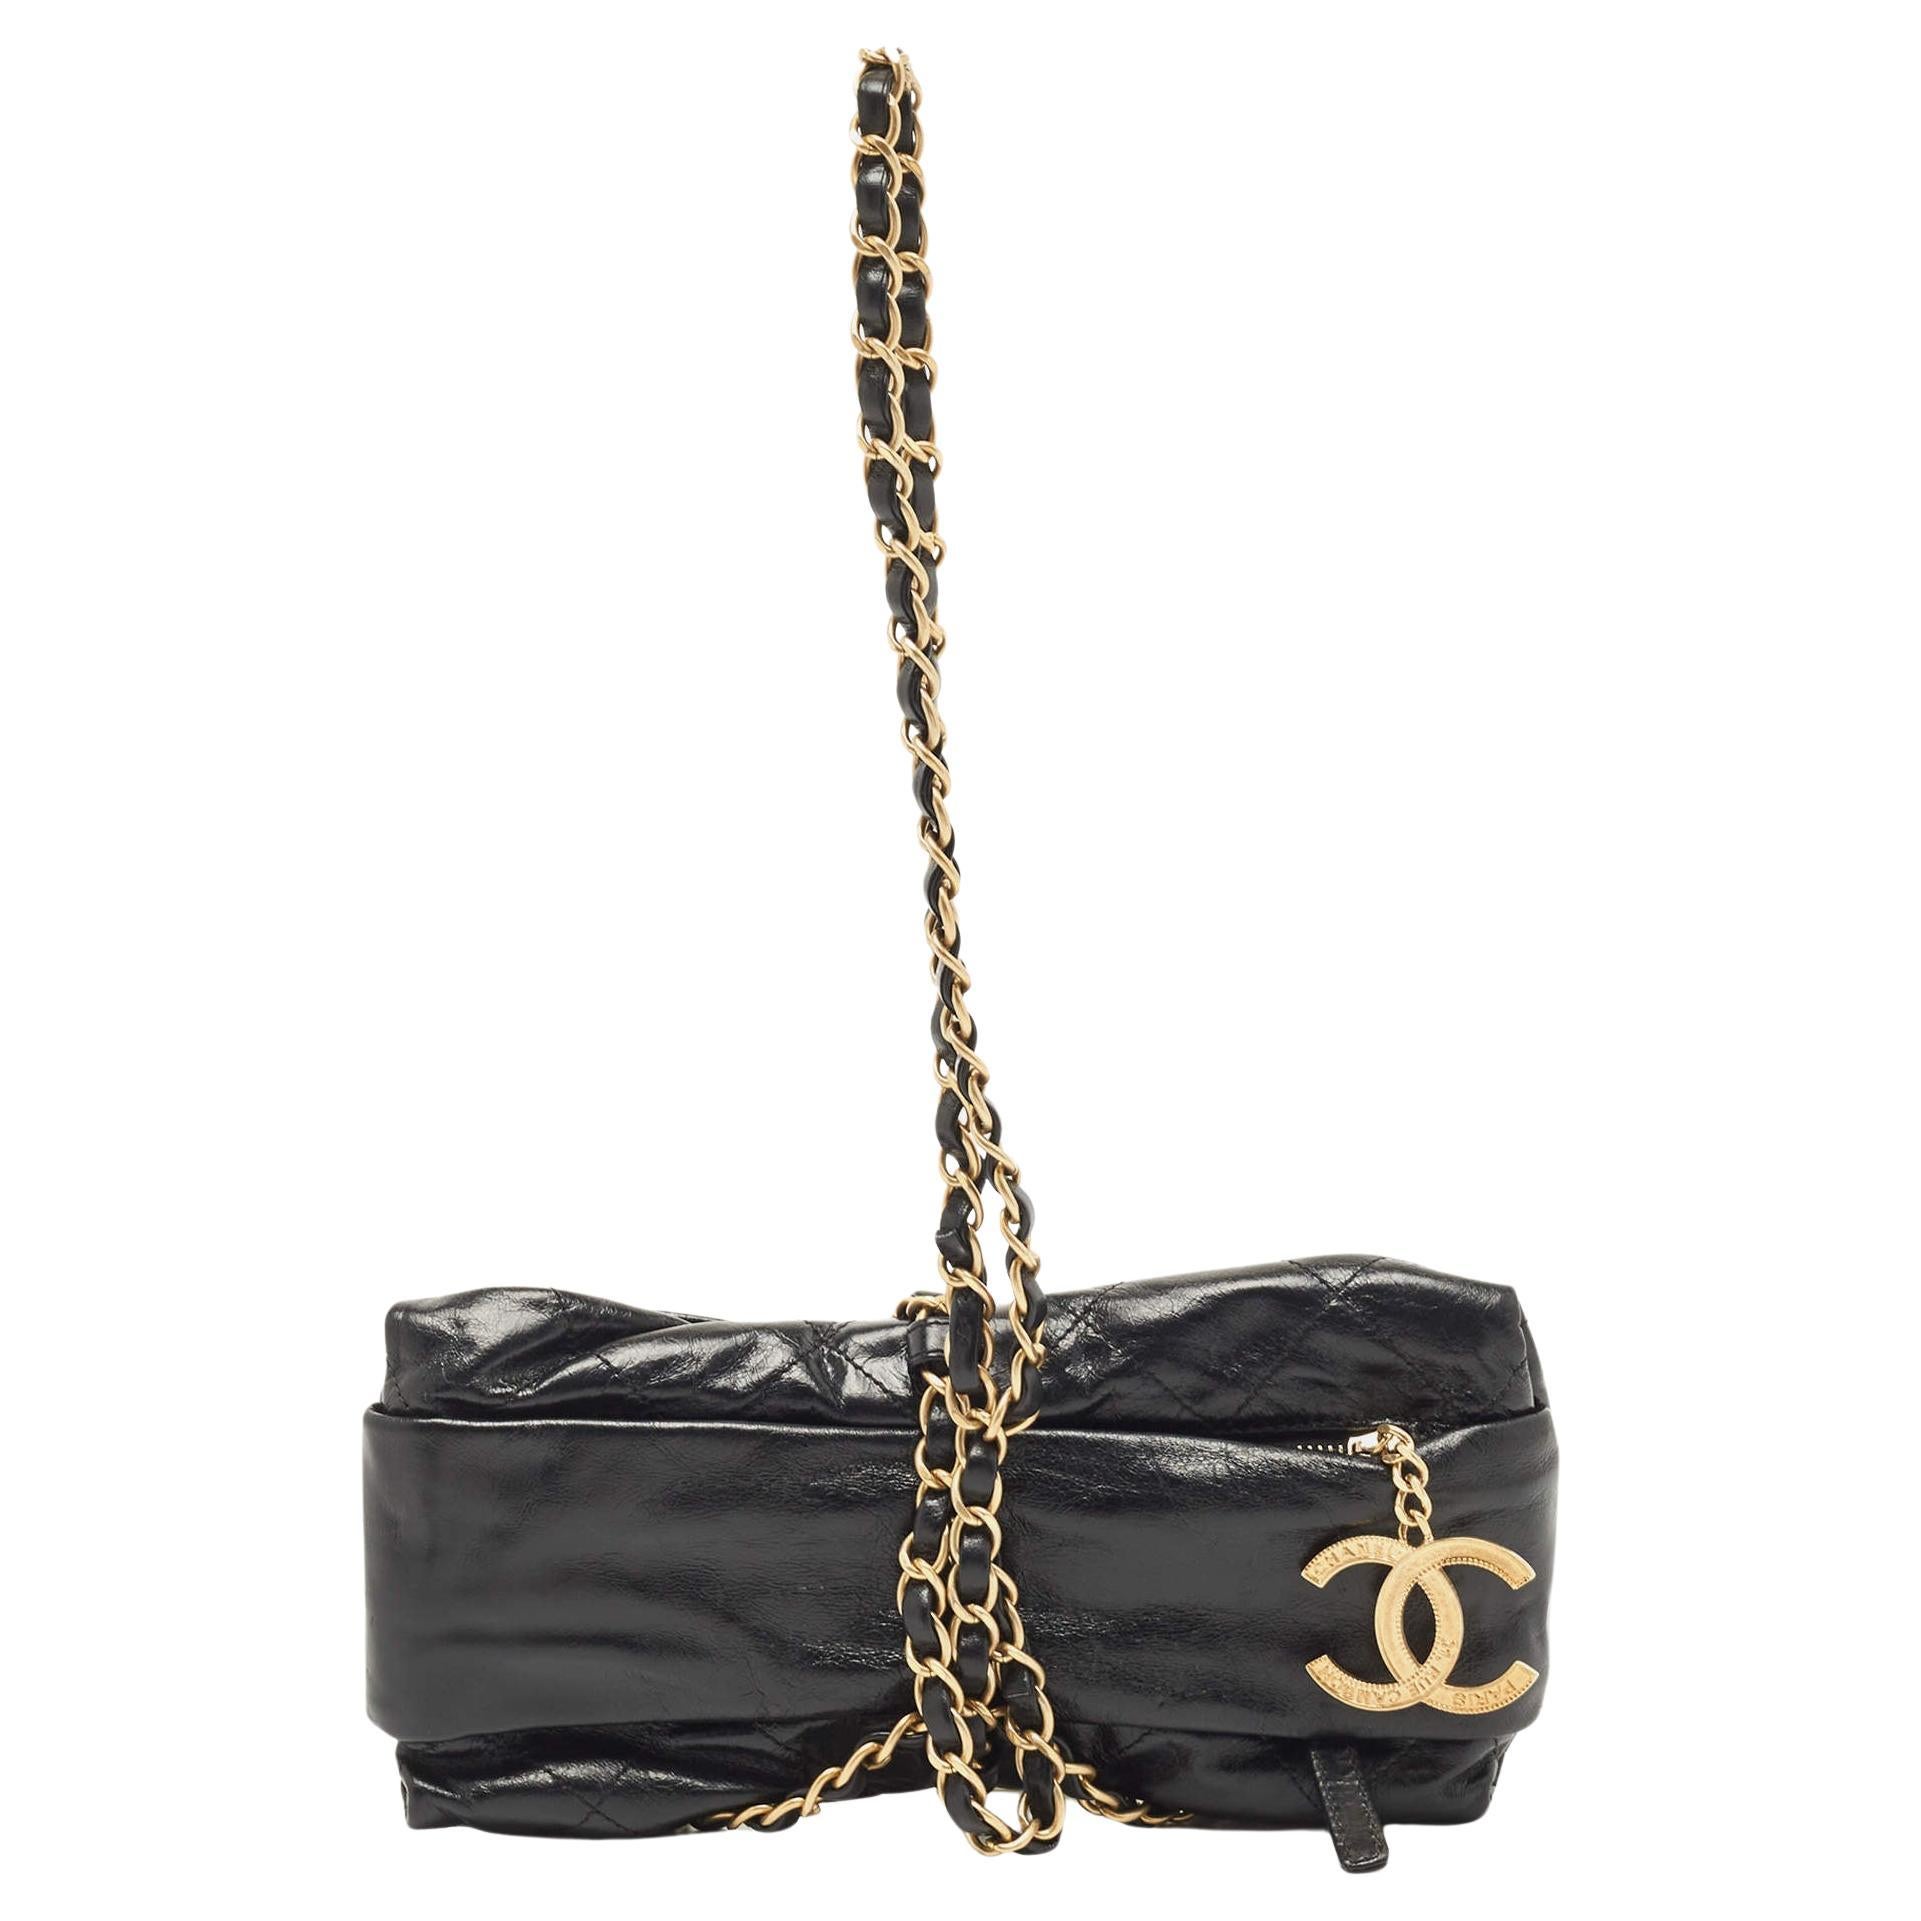 Chanel Paris Bombay Bag - 4 For Sale on 1stDibs